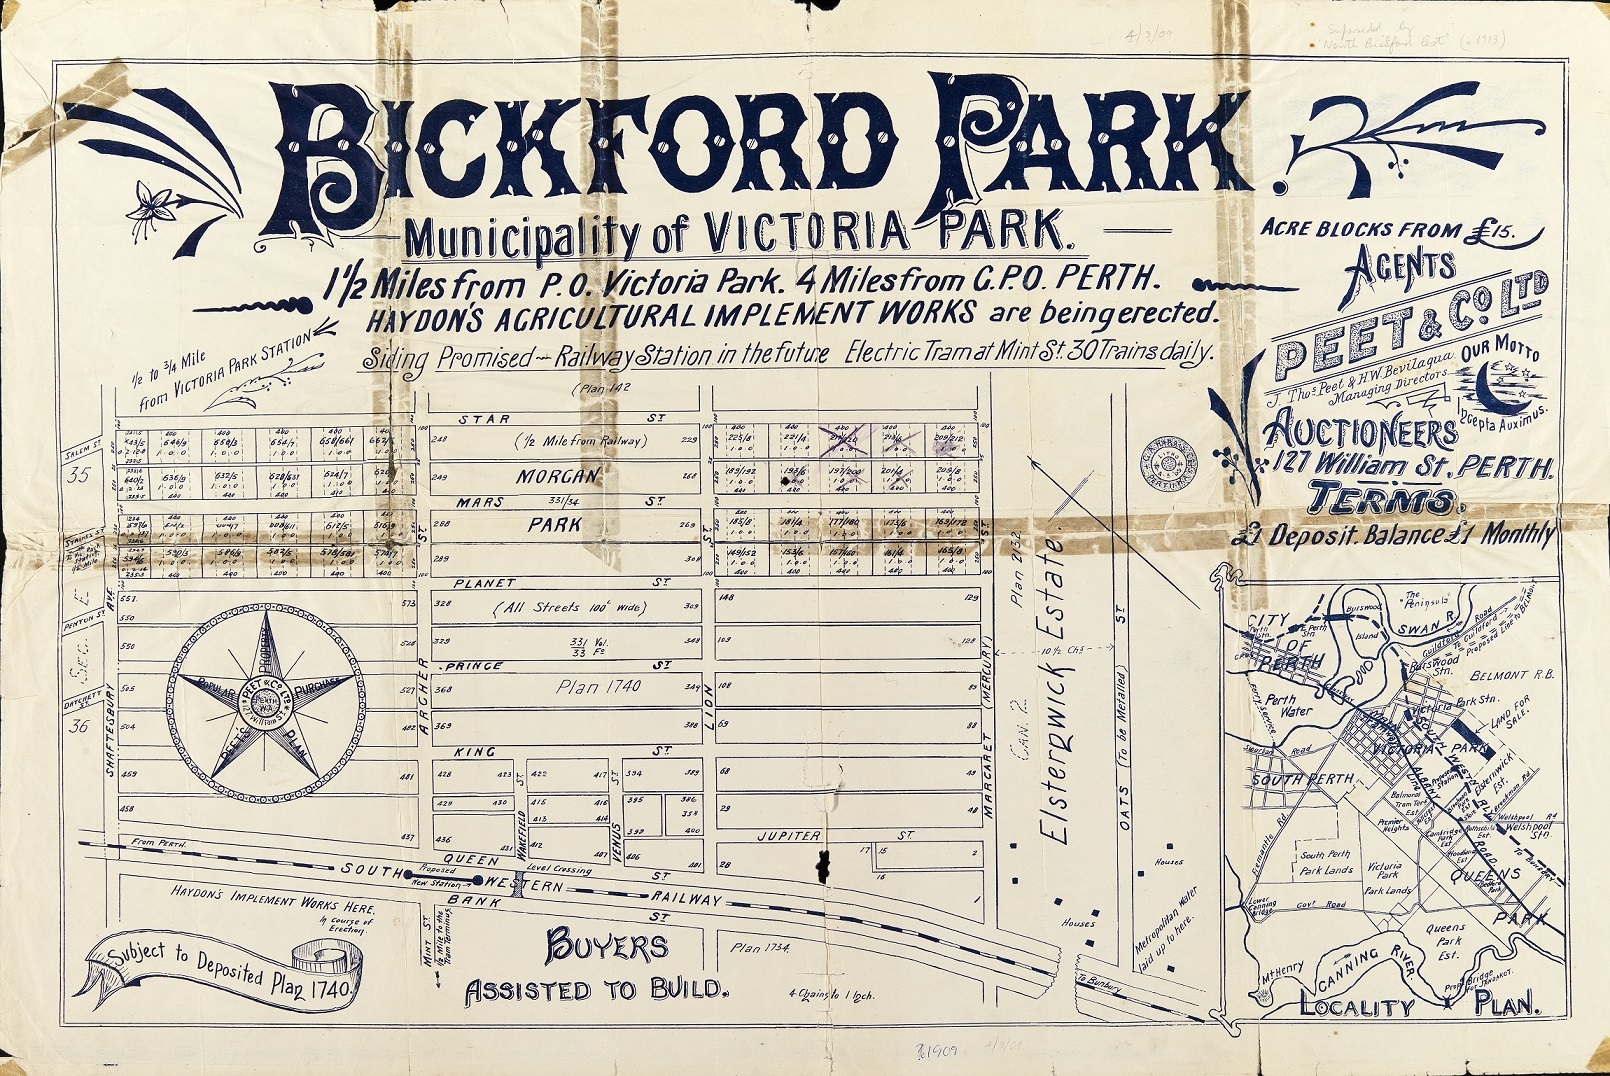 Bickford Park, Municipality of Victoria Park [1909?] Image